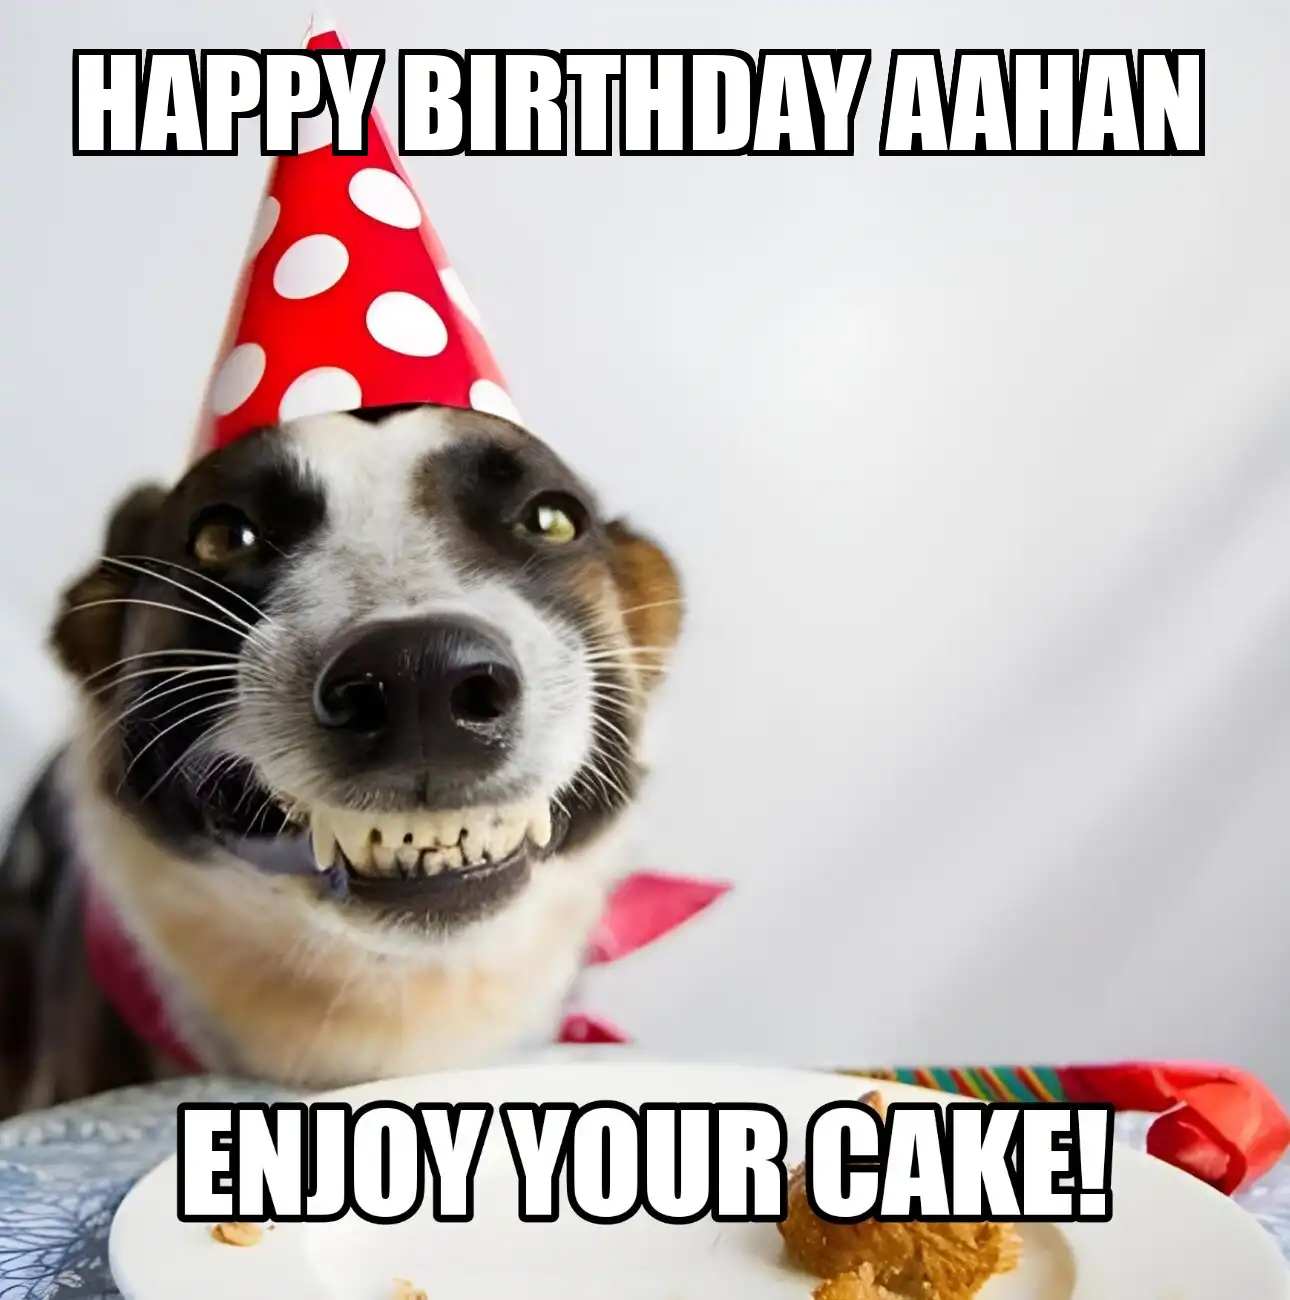 Happy Birthday Aahan Enjoy Your Cake Dog Meme